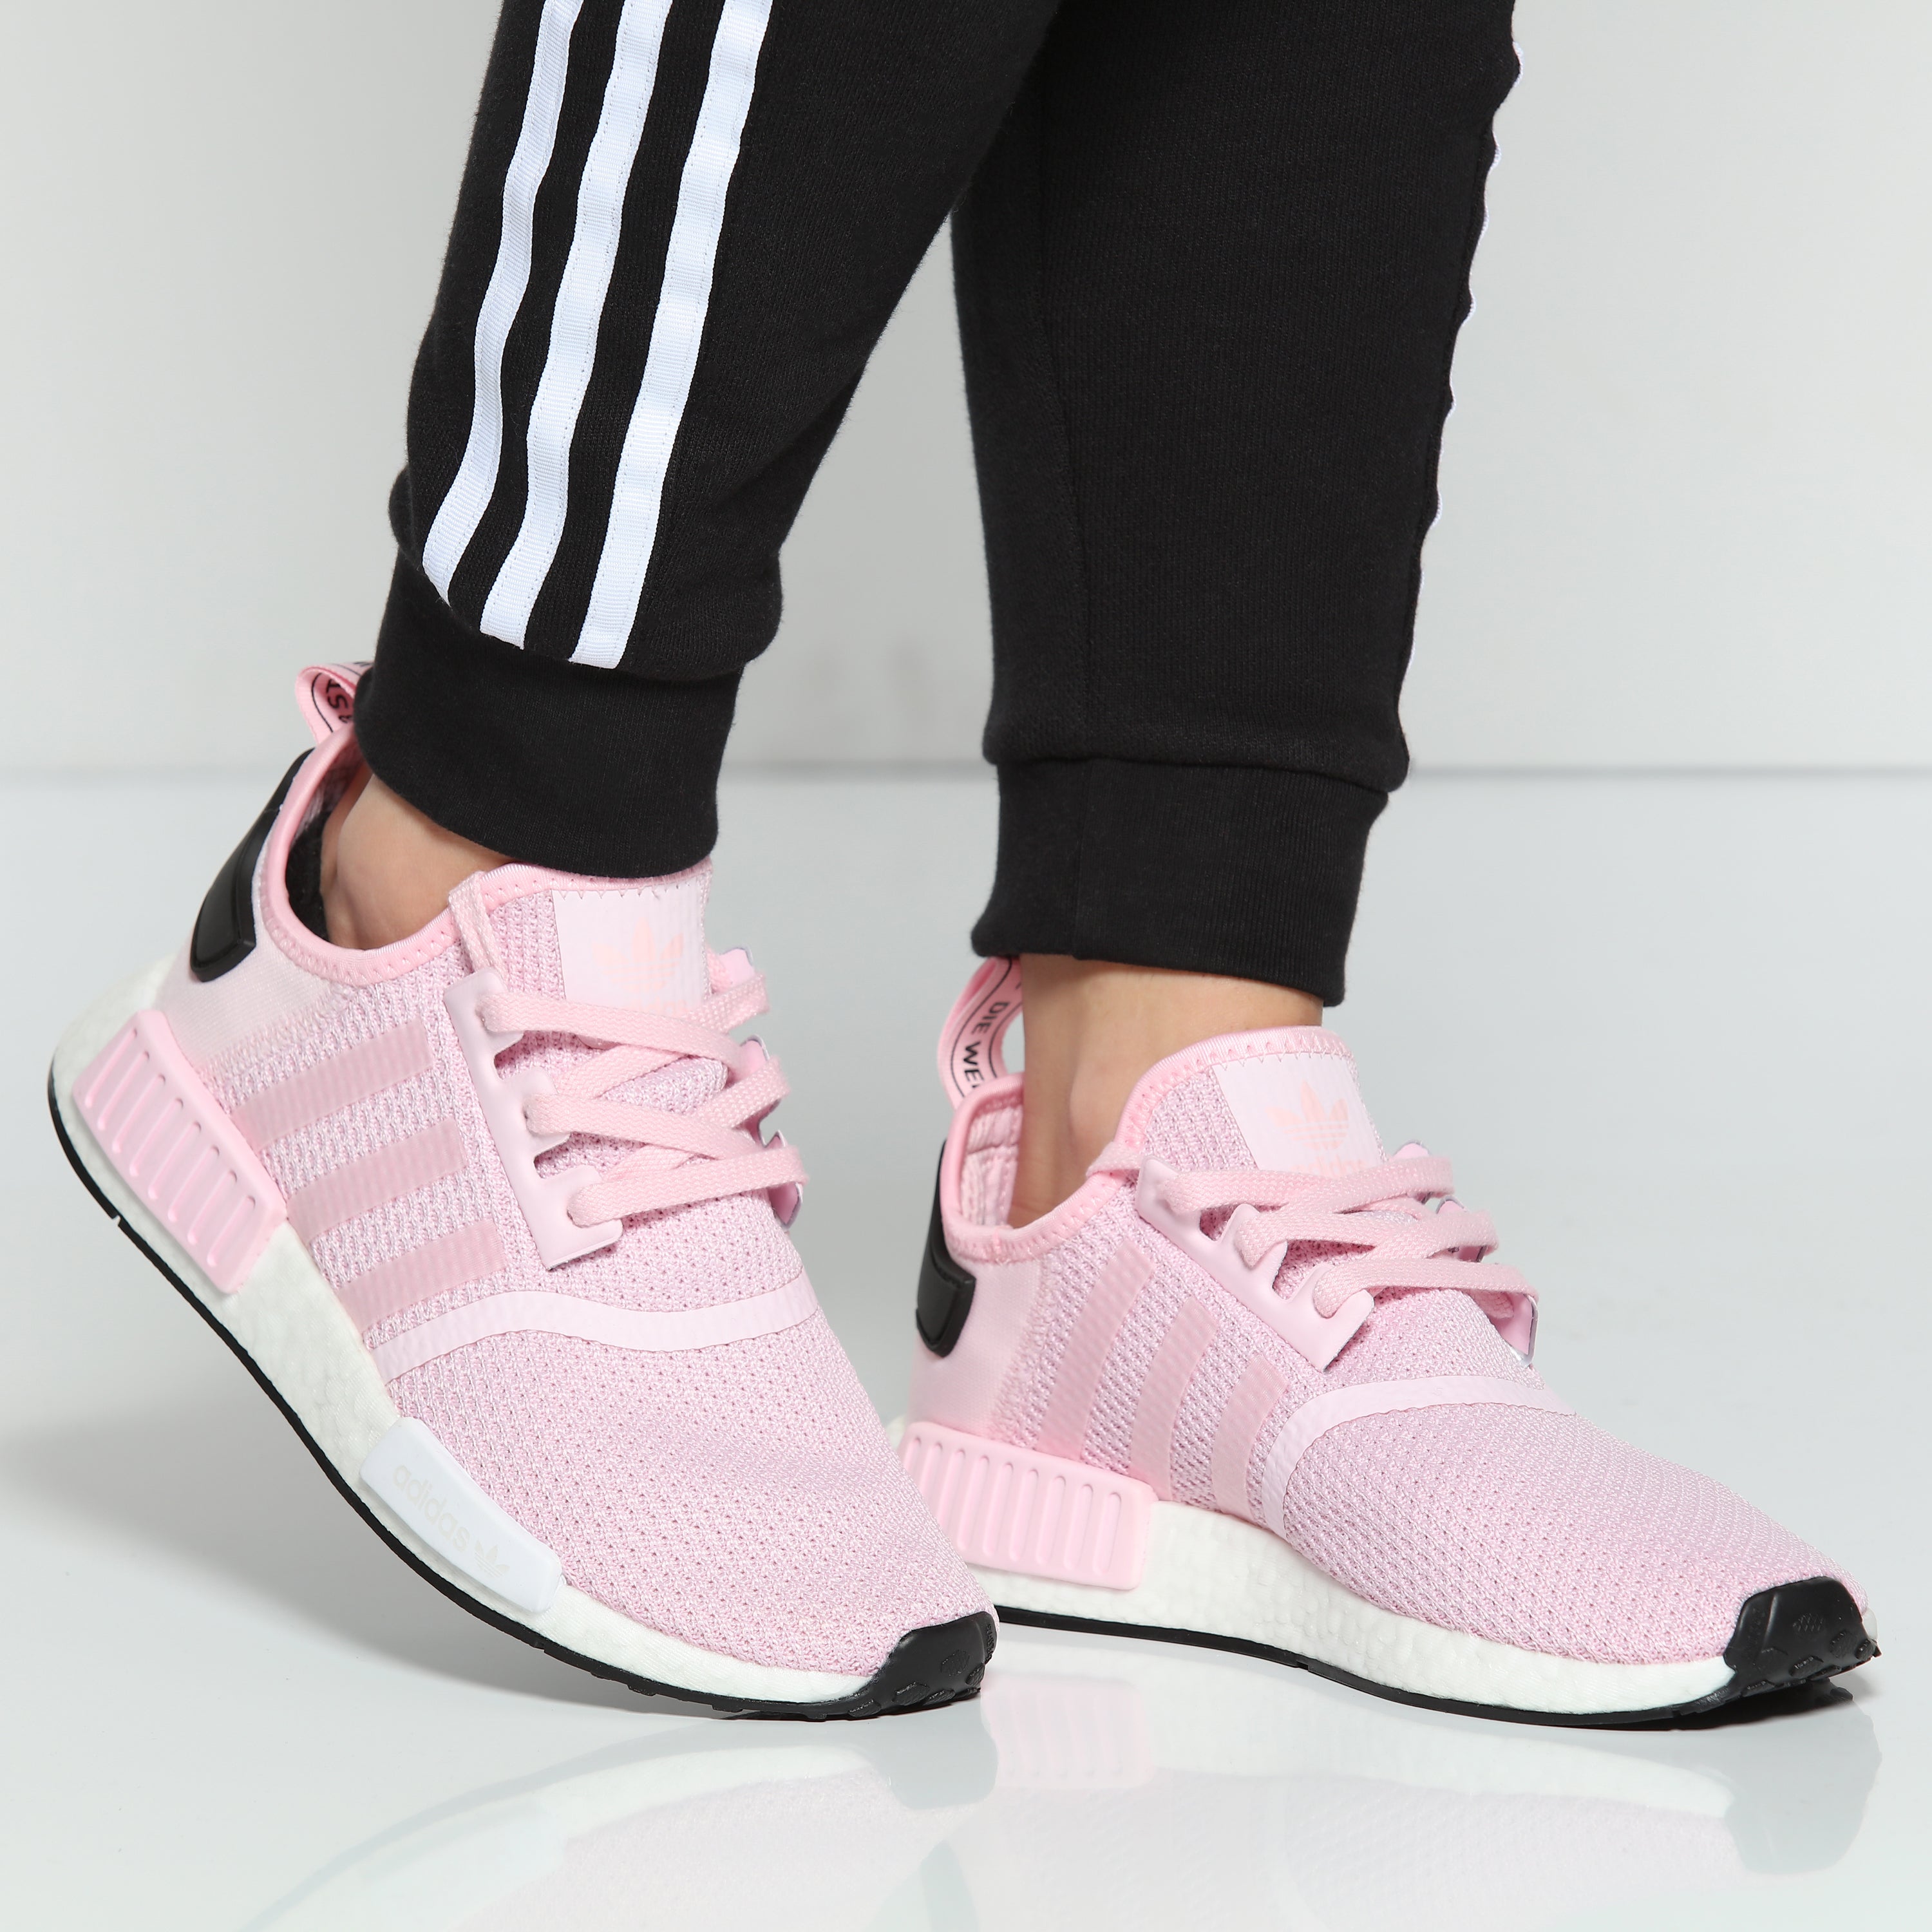 adidas nmd womens pink